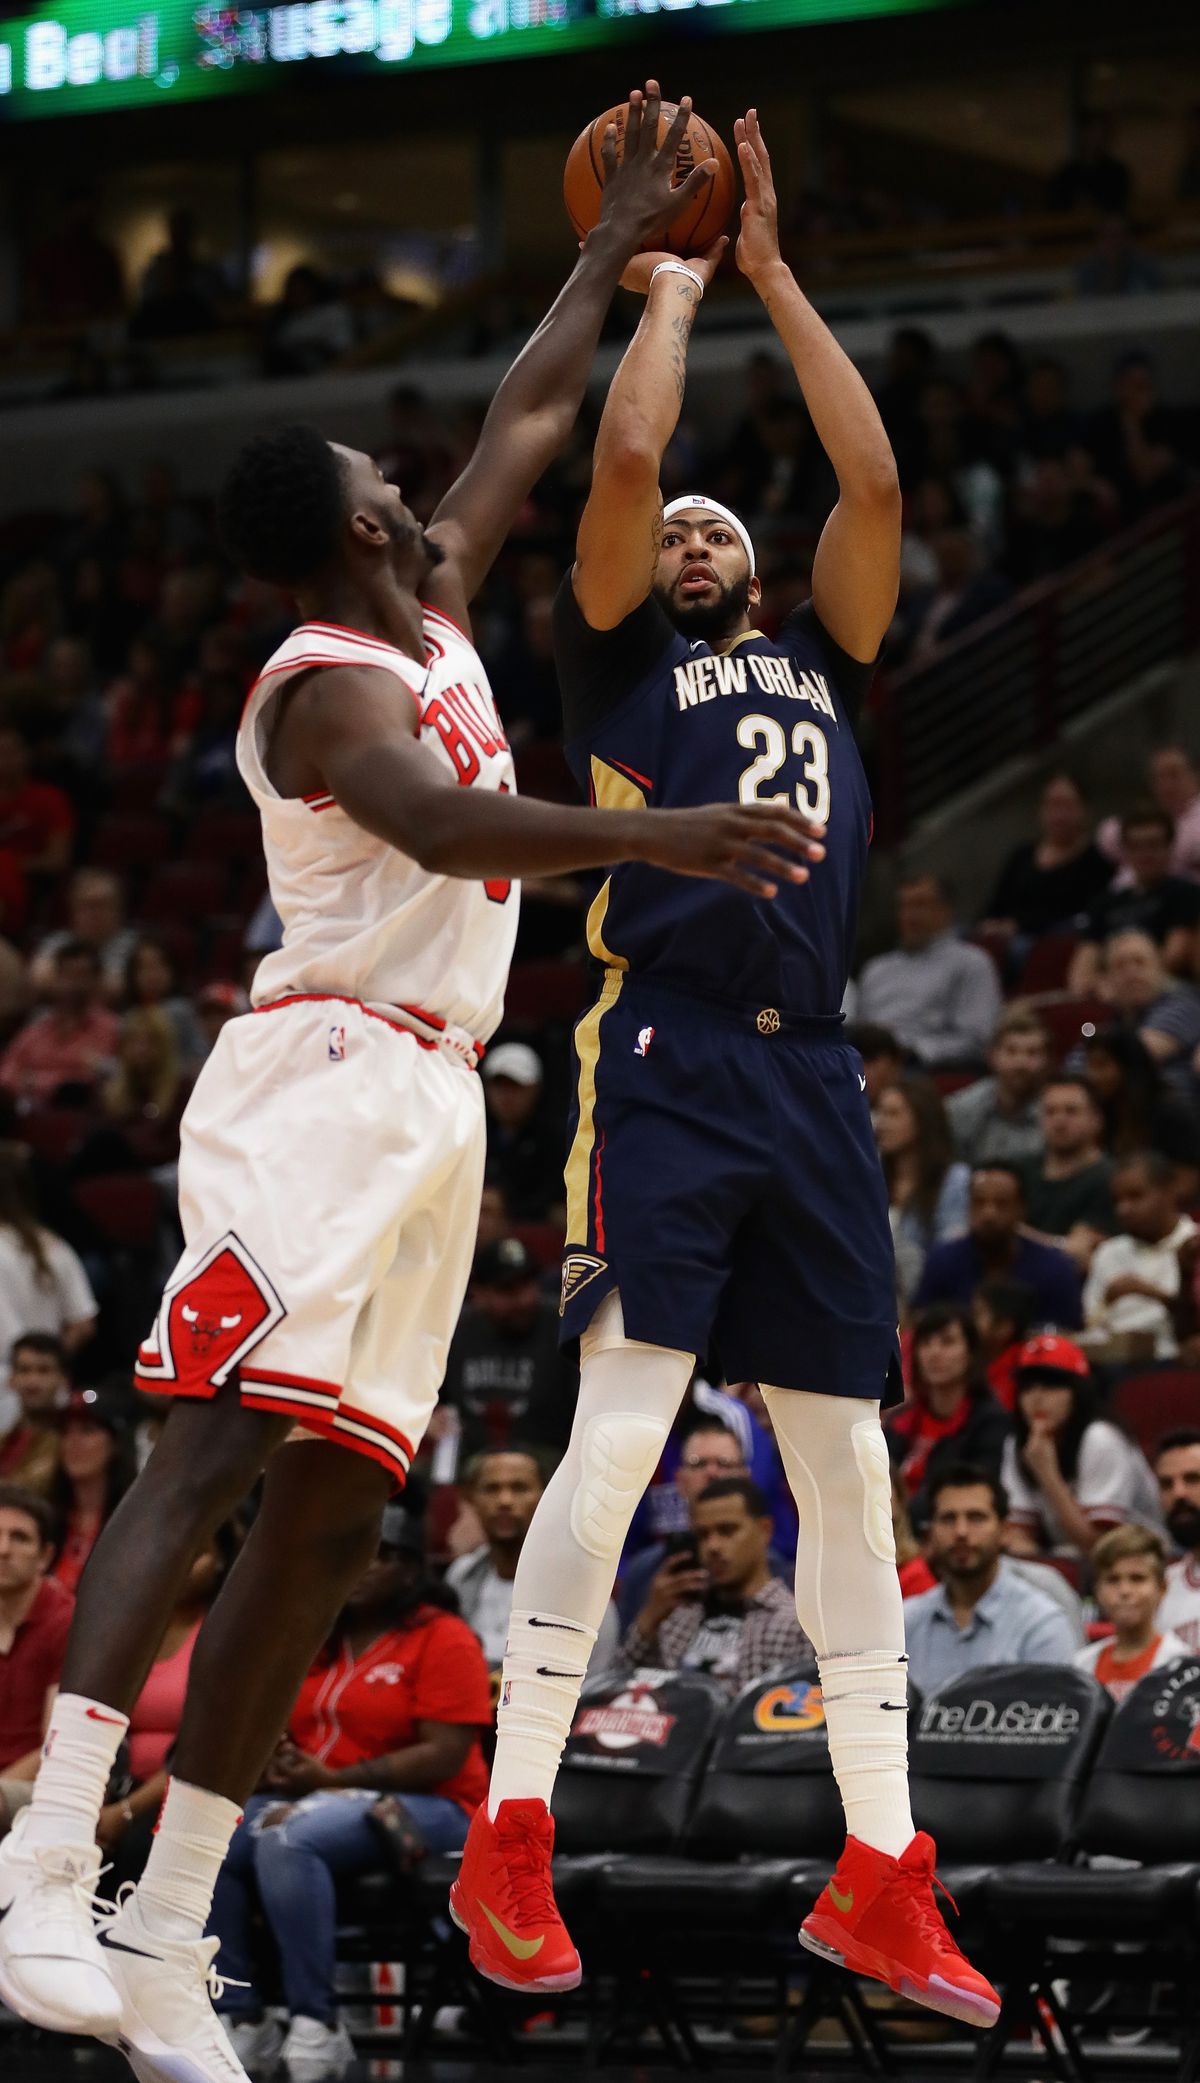 New Orleans Pelicans v Chicago Bulls